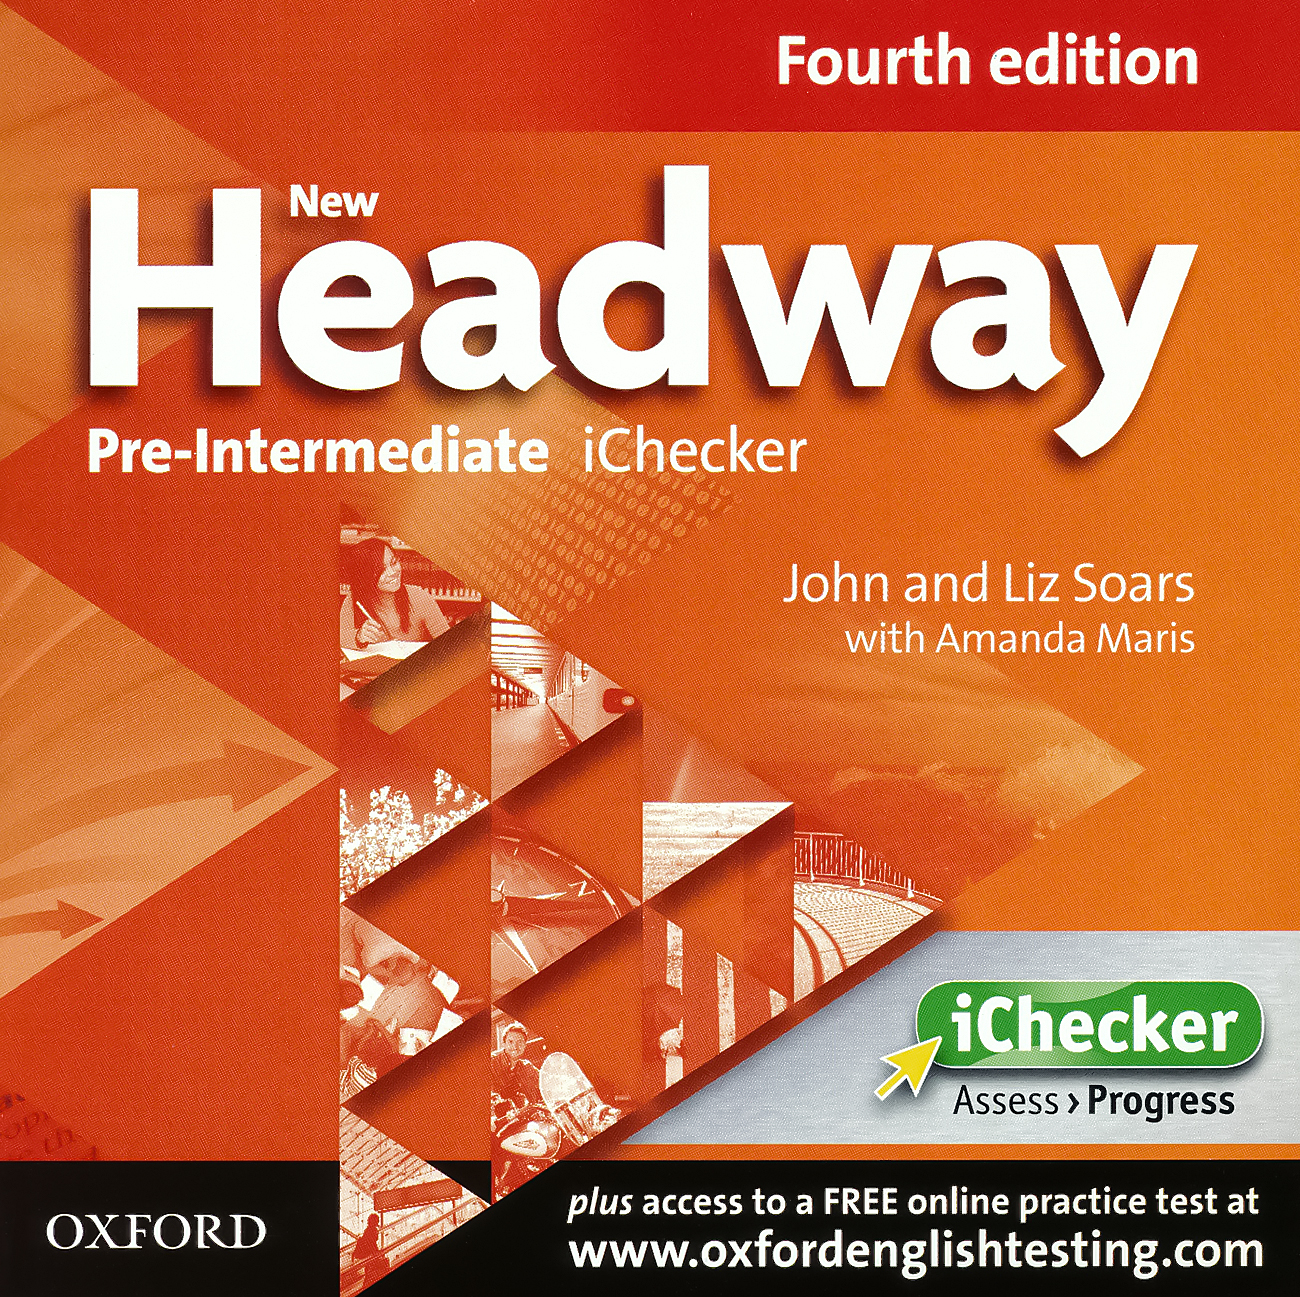 New headway pre intermediate book. Headway pre-Intermediate 4th Edition. Headway Upper Intermediate 4th Edition. New Headway pre-Intermediate 4th Edition. Headway b2.